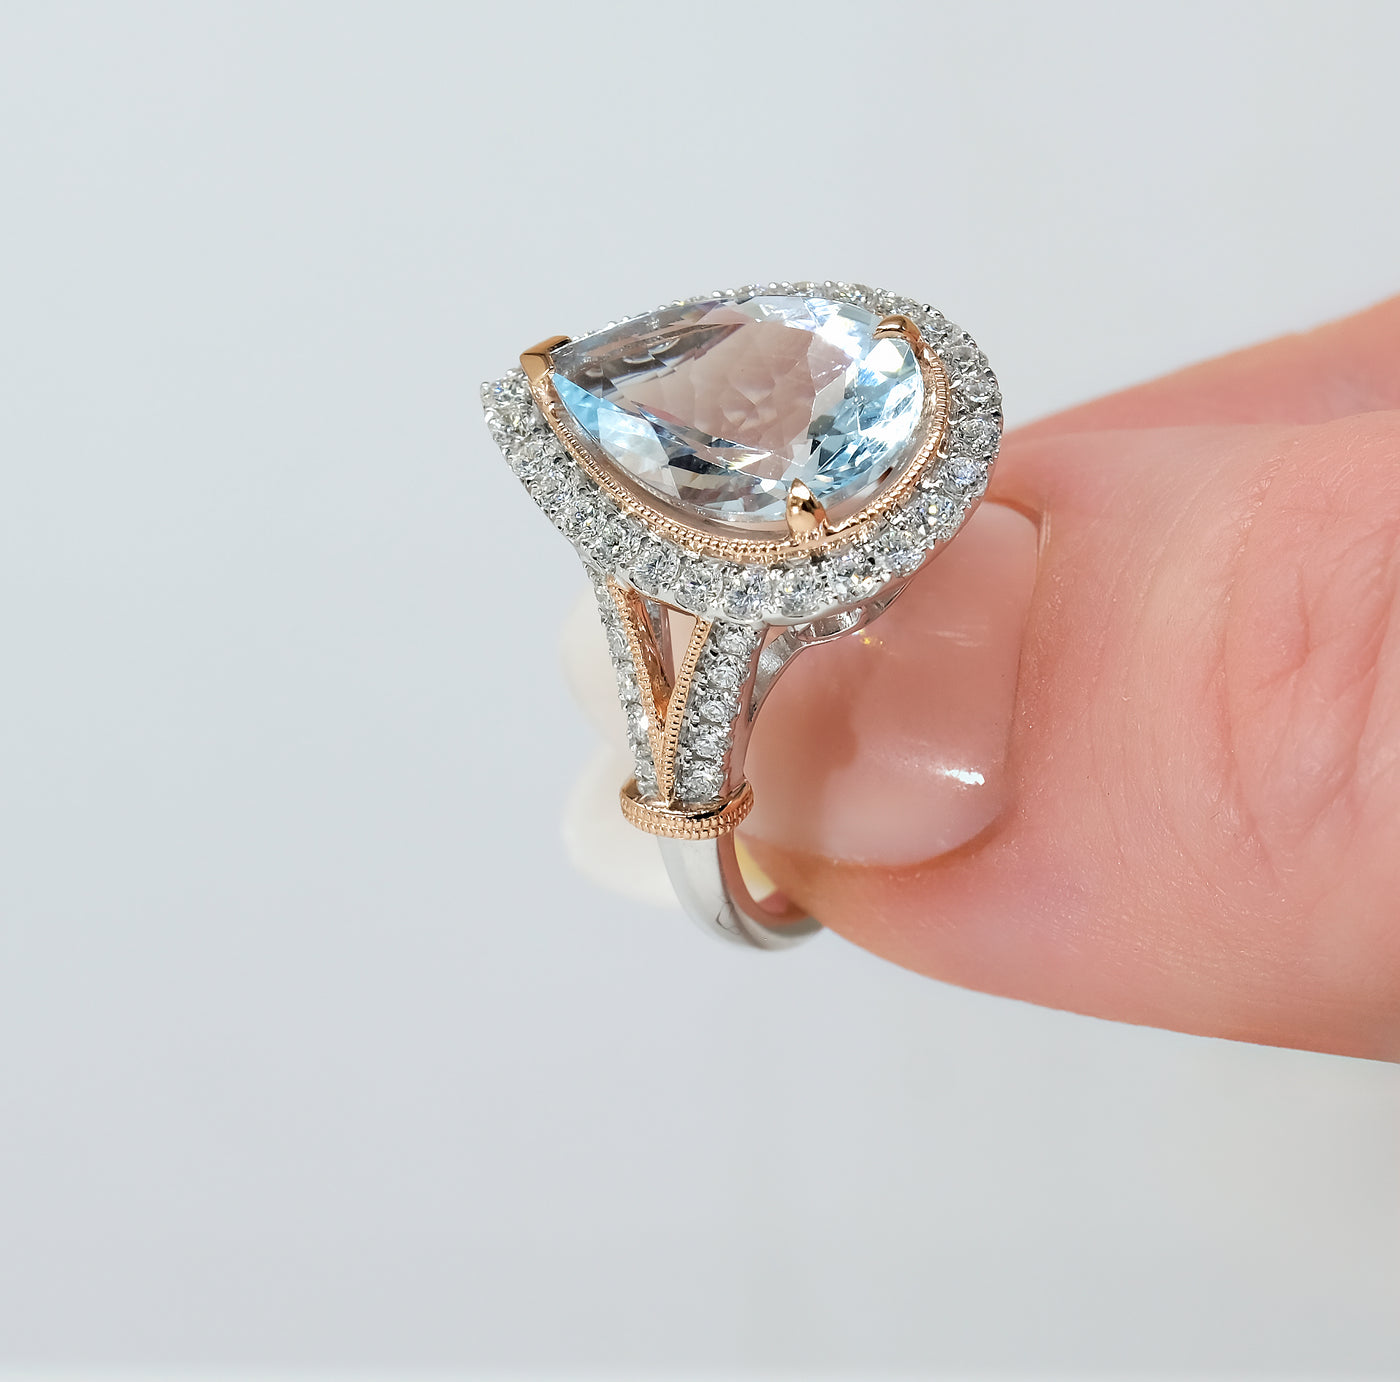 14K White Gold Aquamarine & Diamond Ring